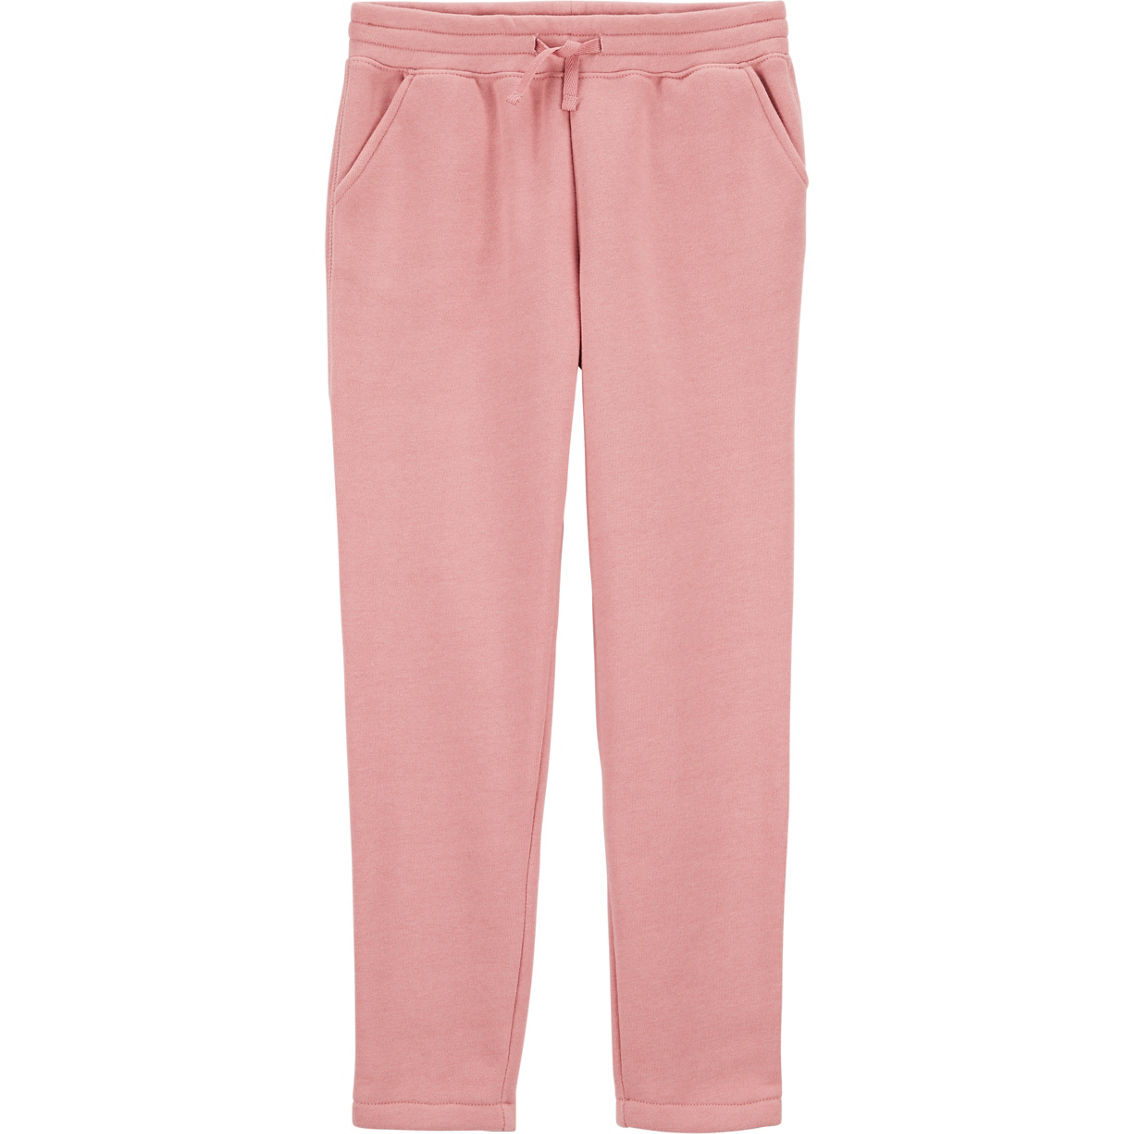 Oshkosh B'gosh Little Girls Pink Pull On Fleece Pants | Girls 4-6x ...